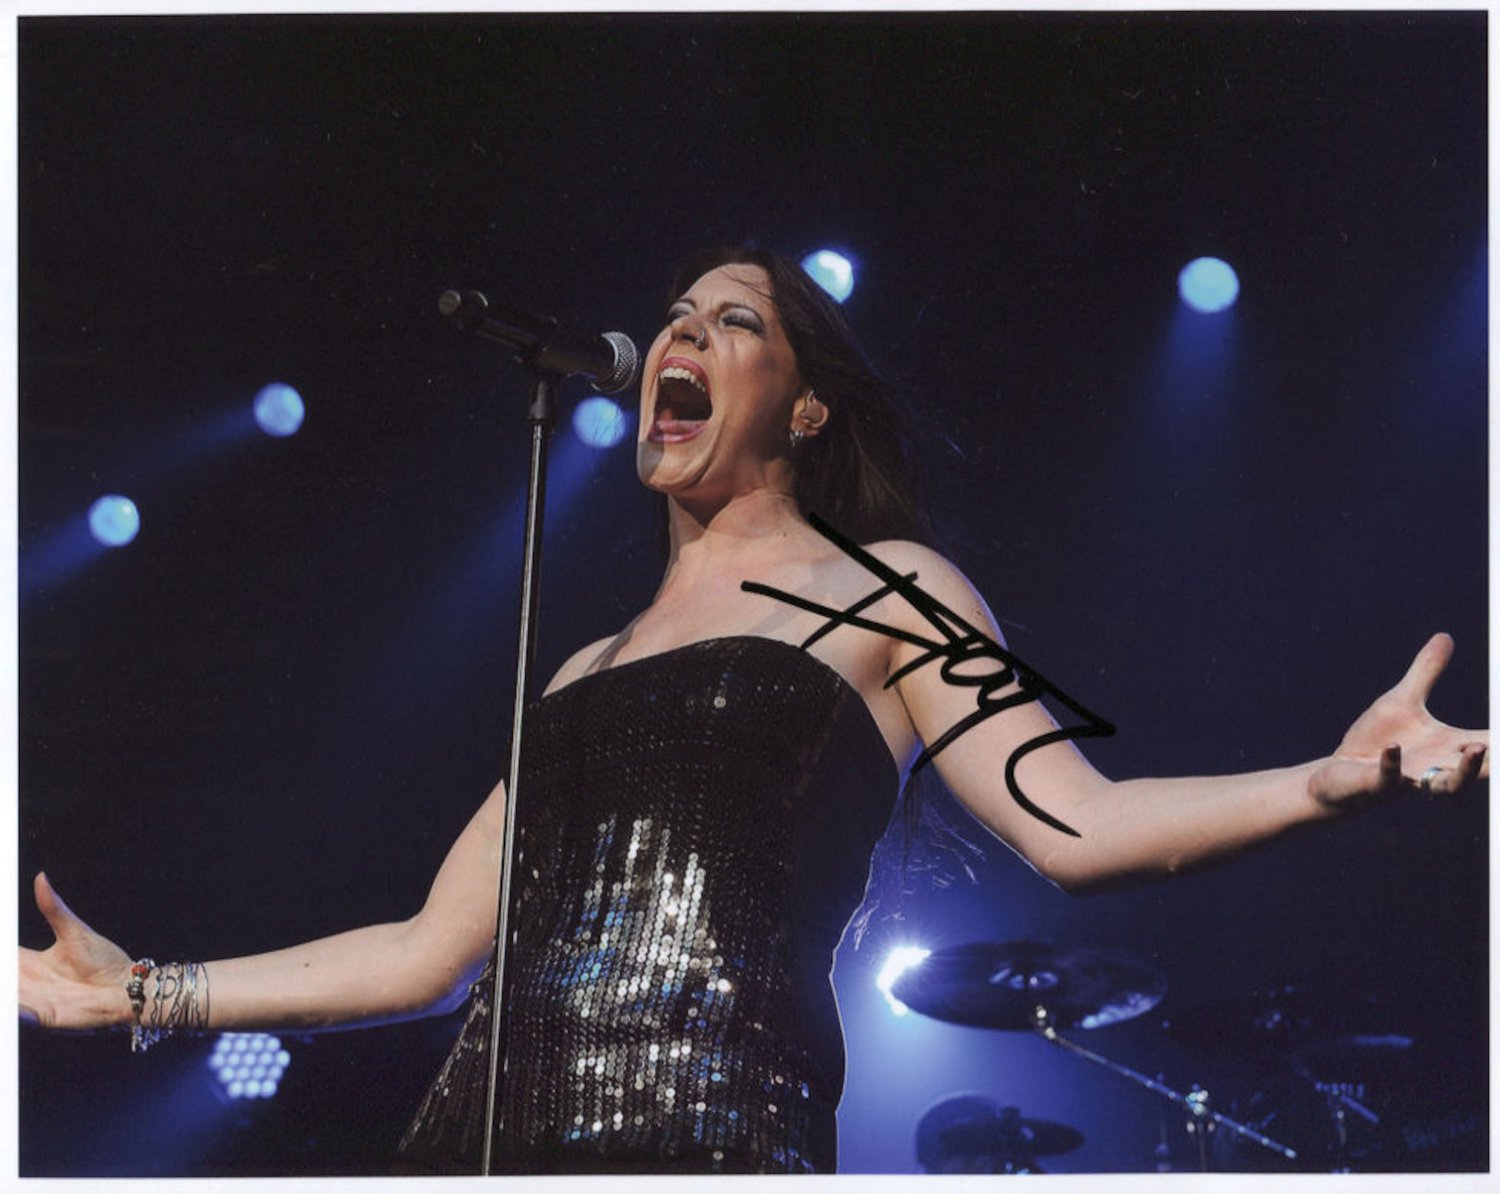 Floor Jansen Nightwish SIGNED Photo 1st Generation PRINT Ltd 150 + Certificate / 2